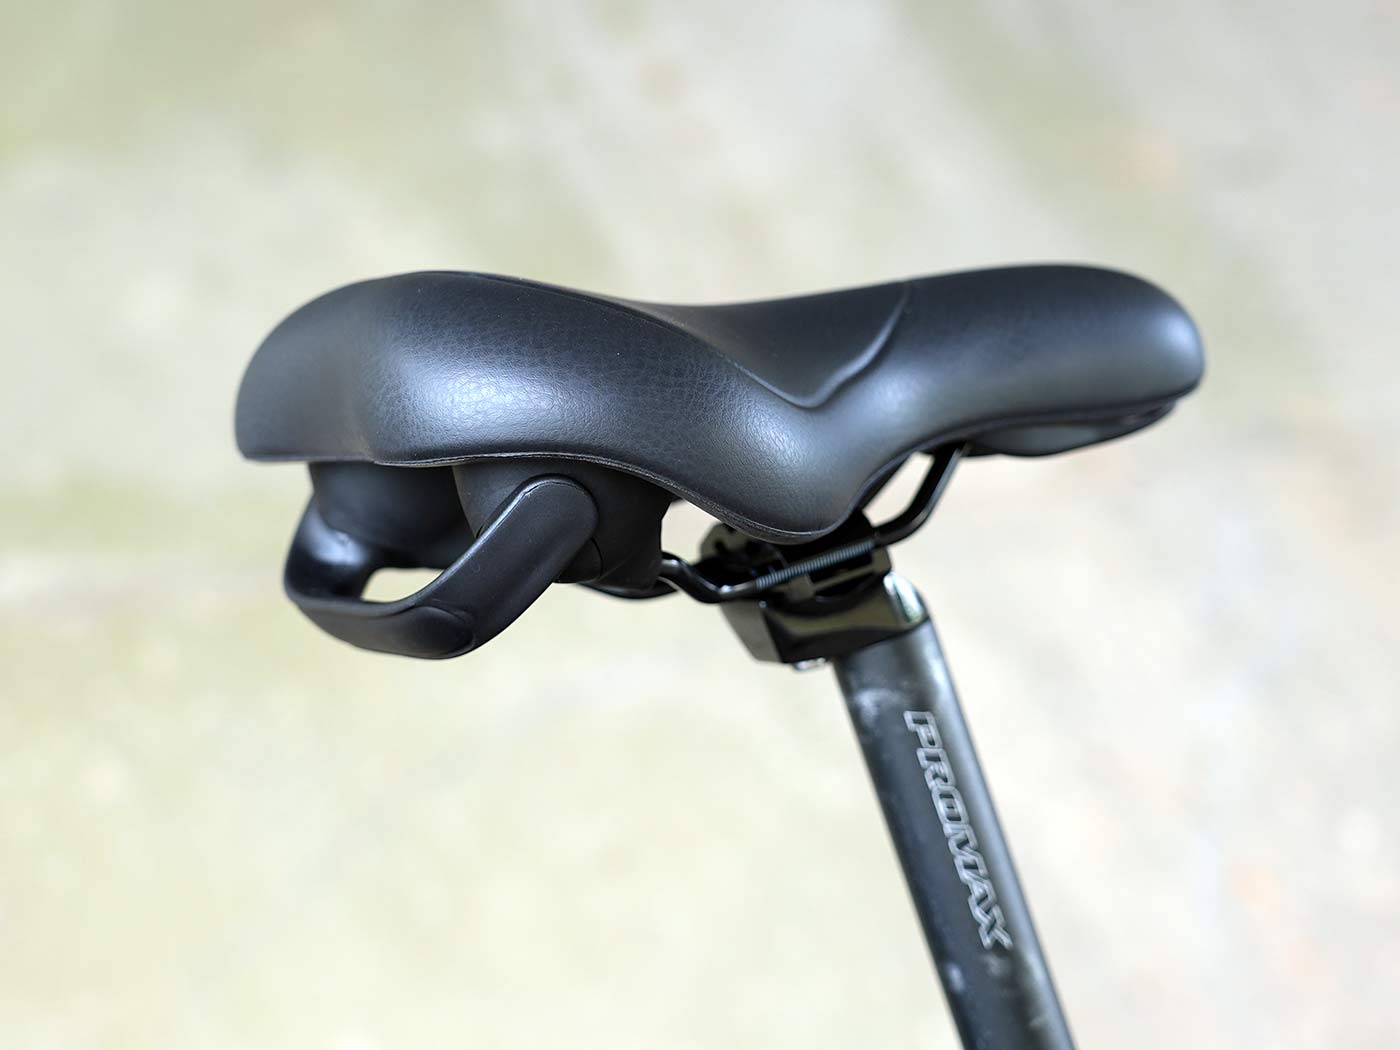 kbo breeze commuter e-bike saddle with lift handle